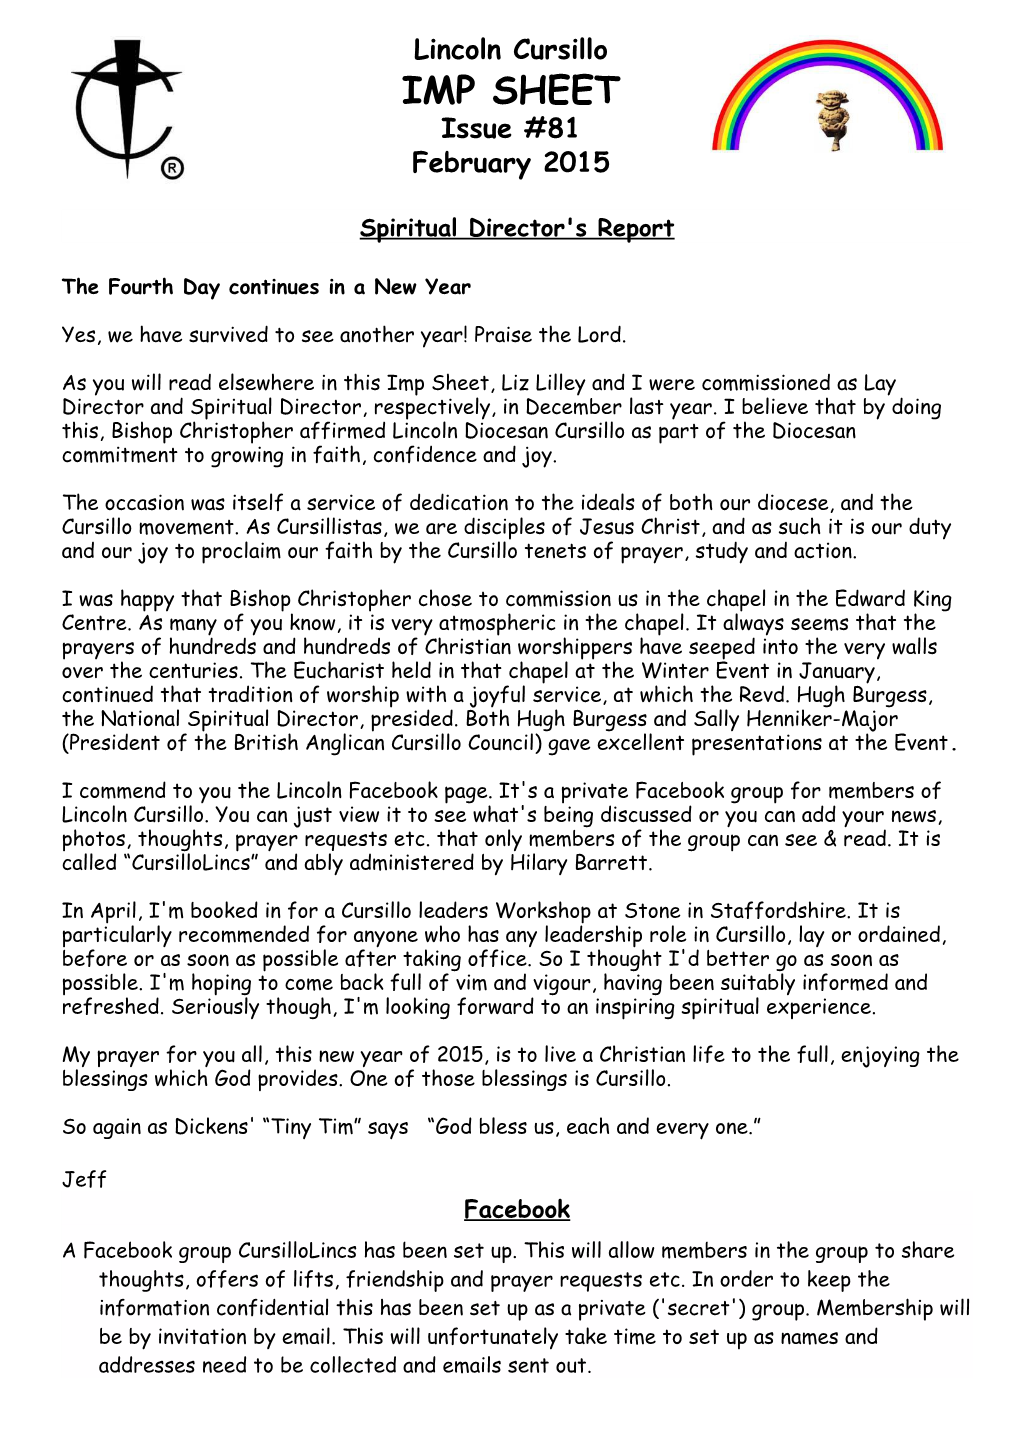 Spiritual Director's Report